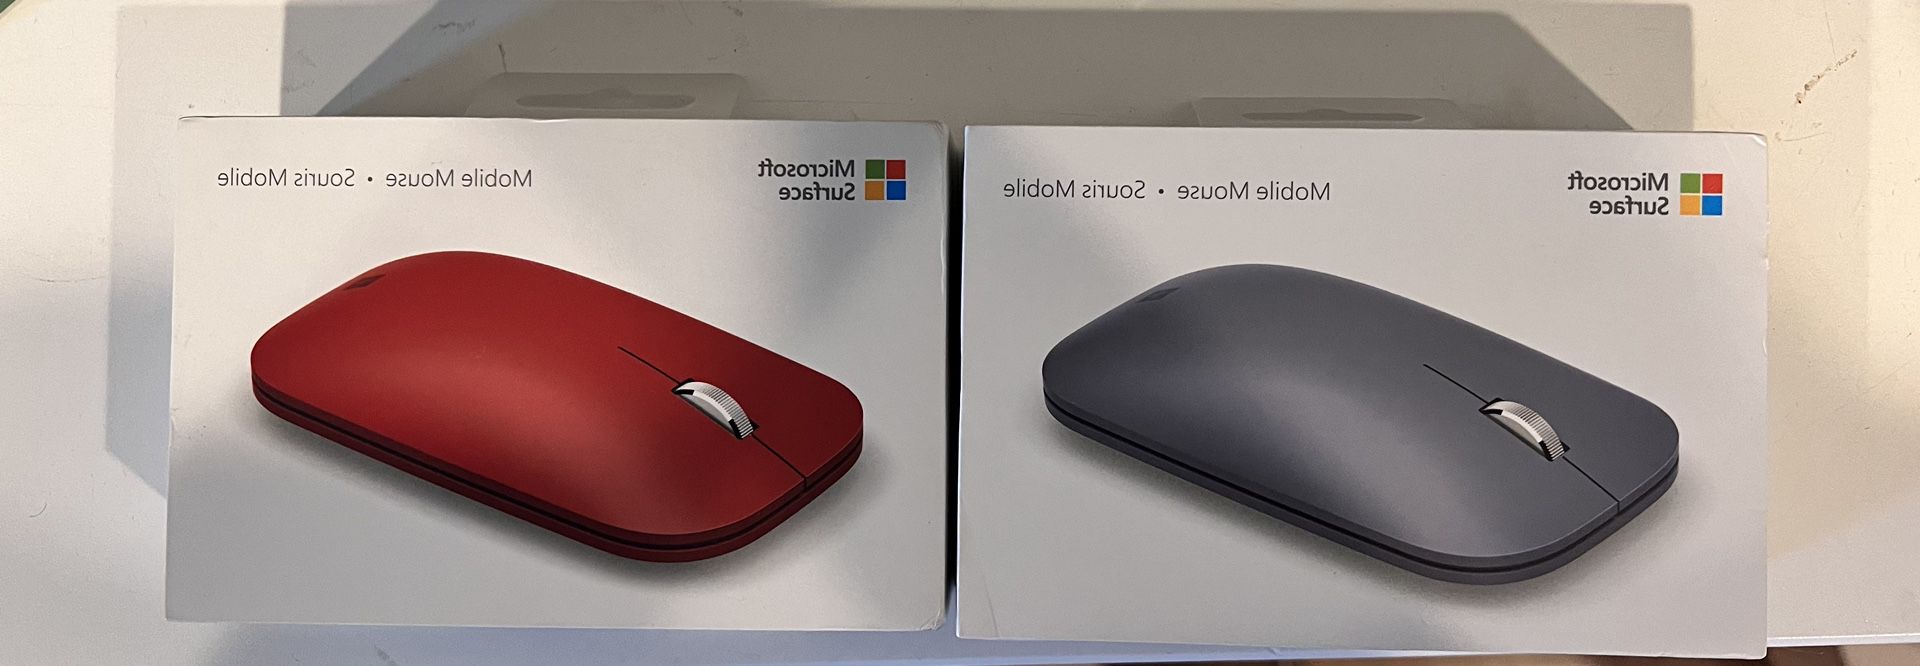 Microsoft Mouse 